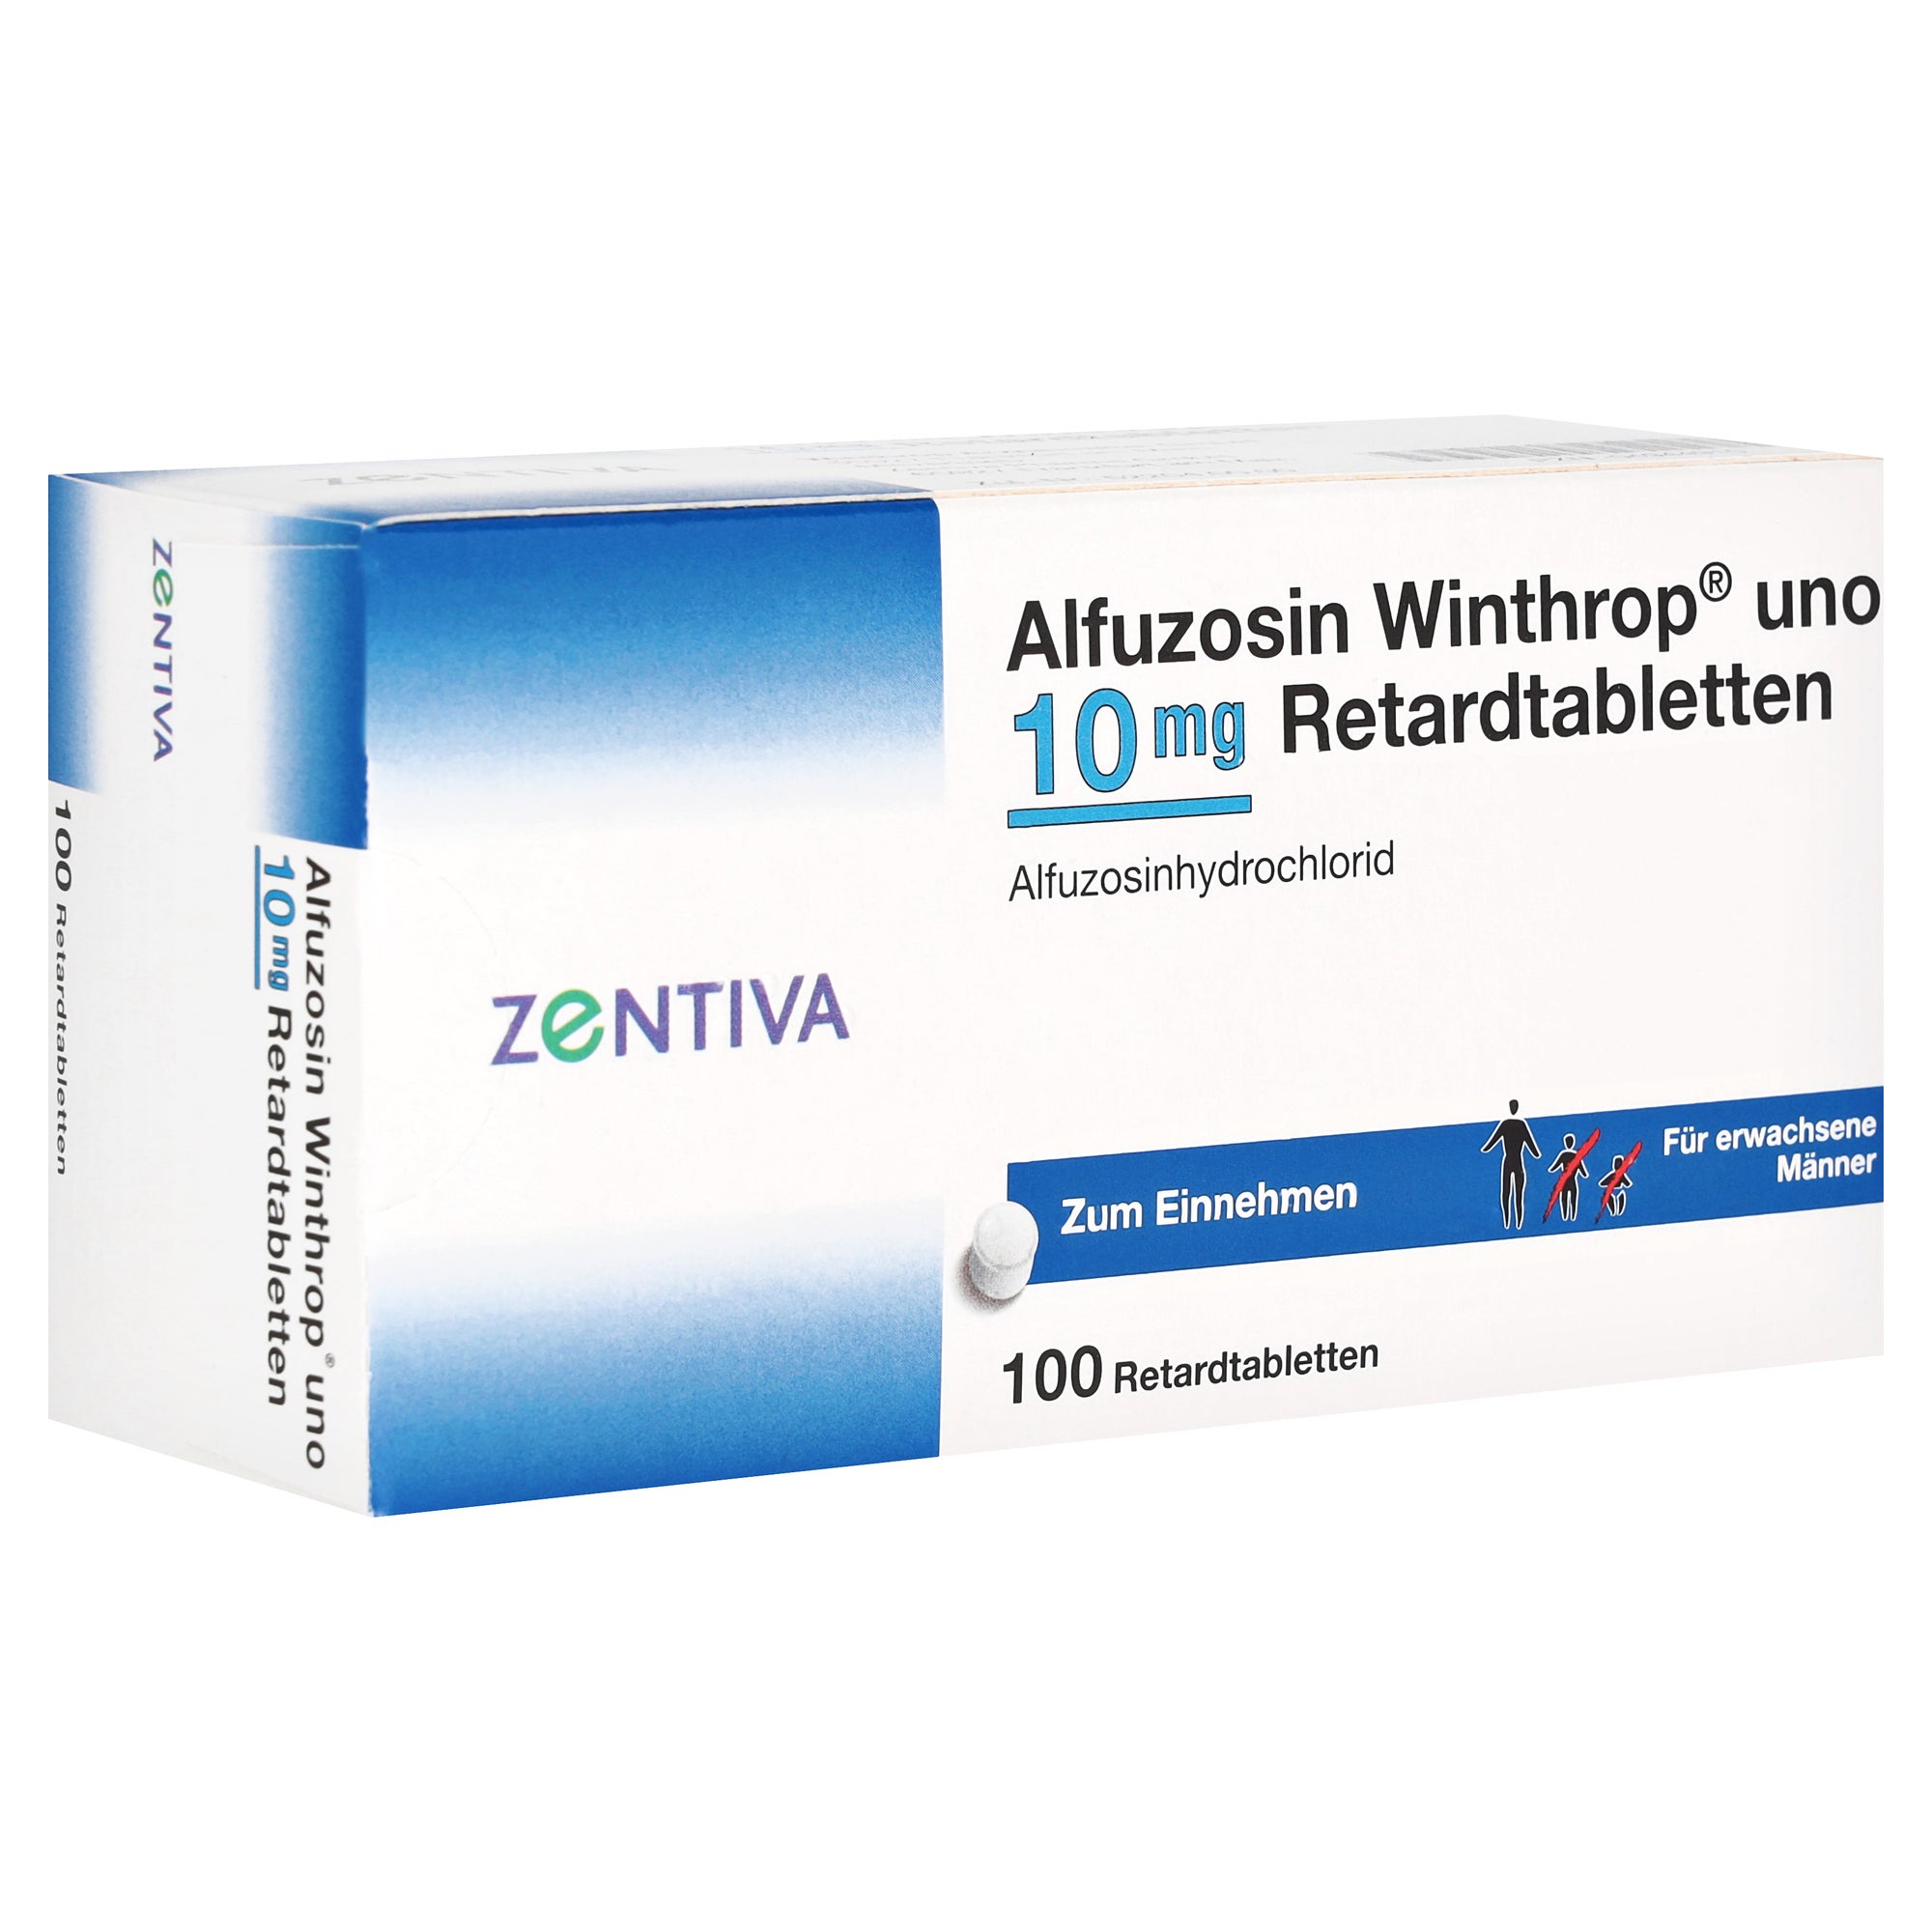 https://media.docmorris.de/produkte-pzn/04944910/alfuzosin-winthrop-uno-10-mg-retardtable-100-st-04944910-default-1000-1705090148@2x.webp